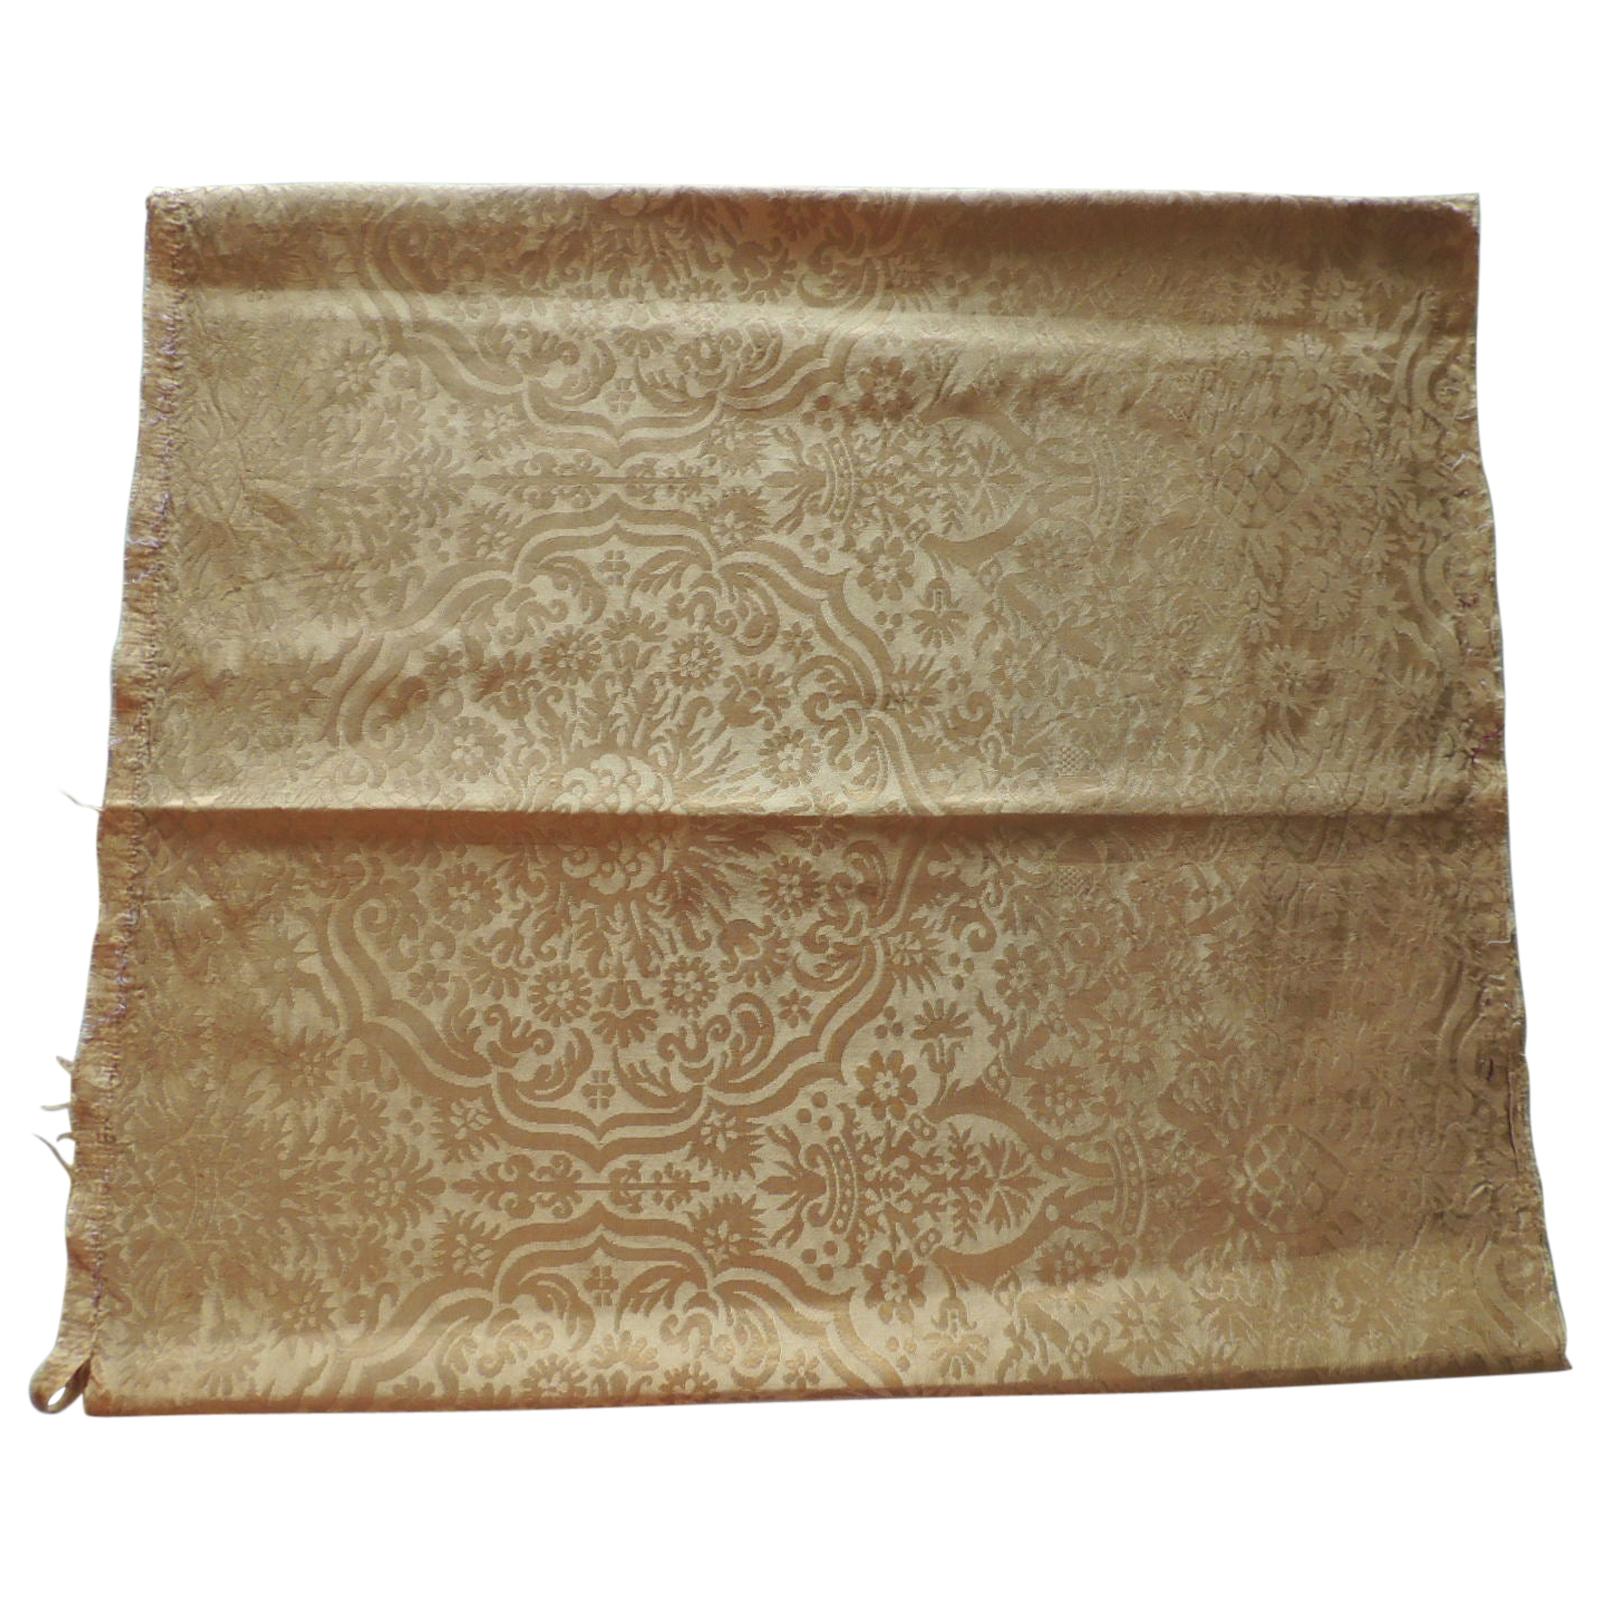 Antique Yellow Silk Damask Textile Fragment